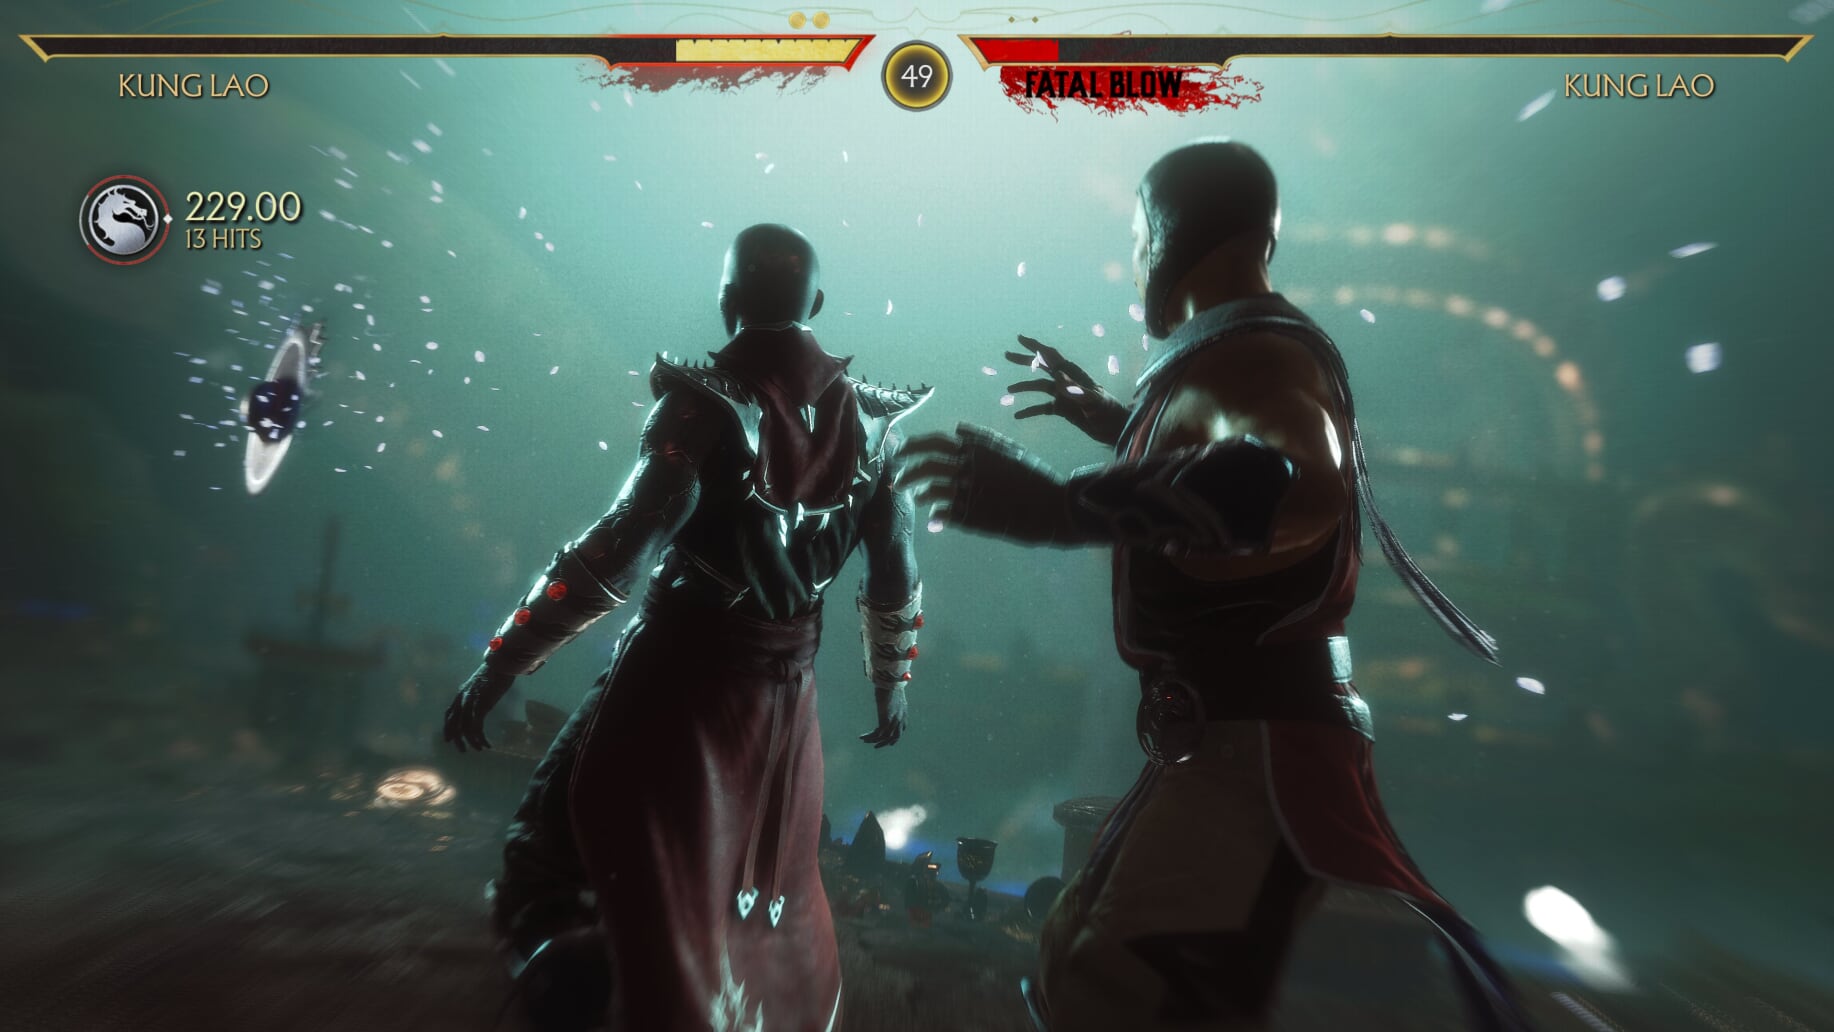 Mortal Kombat Xbox 360 Fatality Guide, PDF, Action Video Games